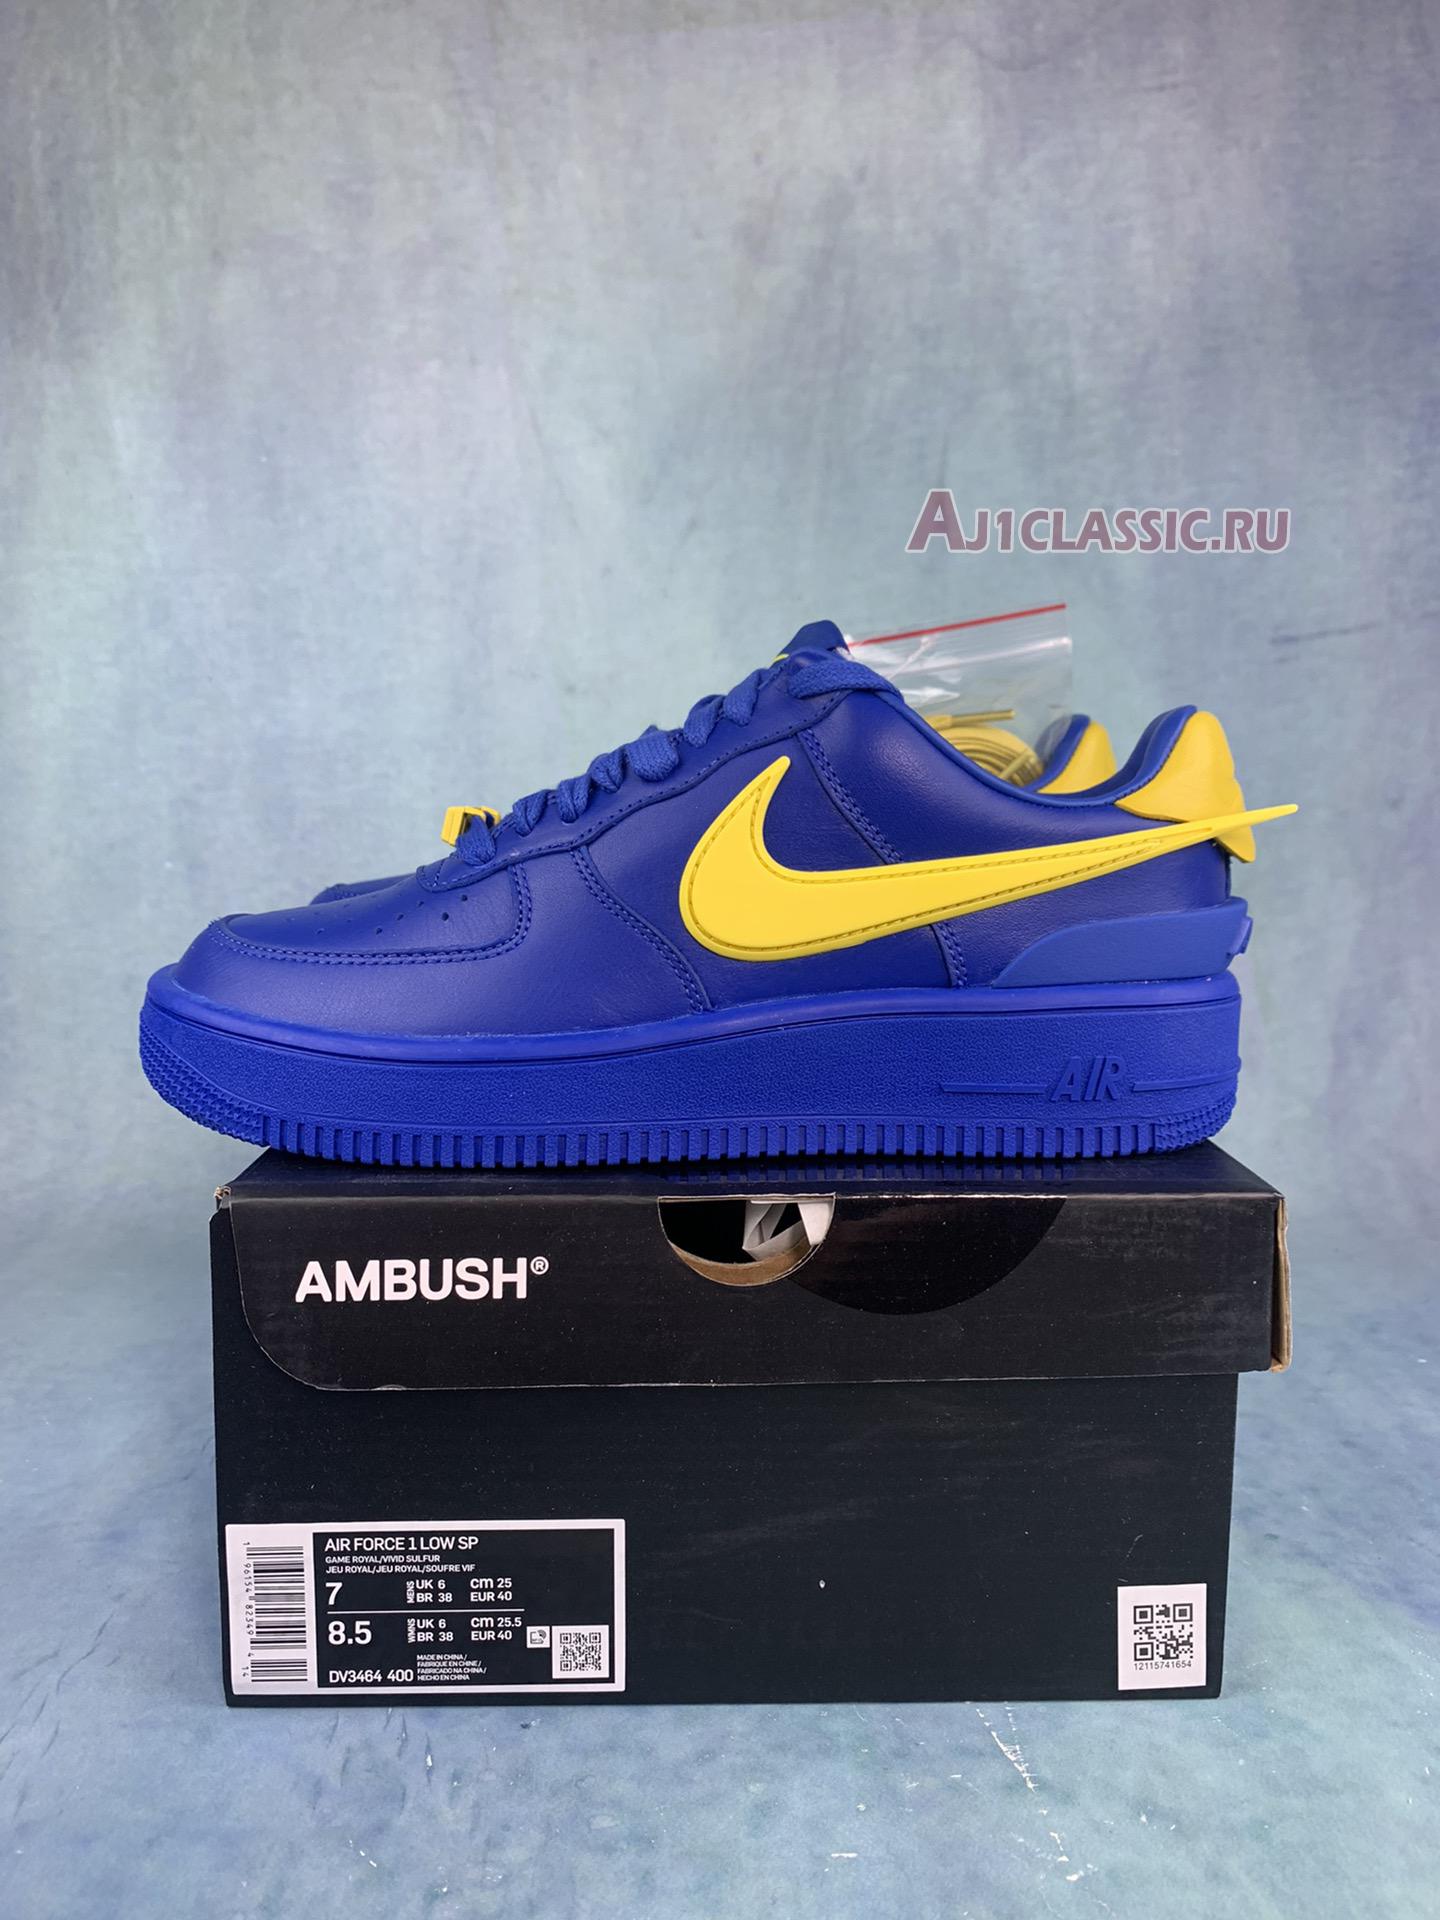 AMBUSH x Nike Air Force 1 Low "Game Royal" DV3464-400